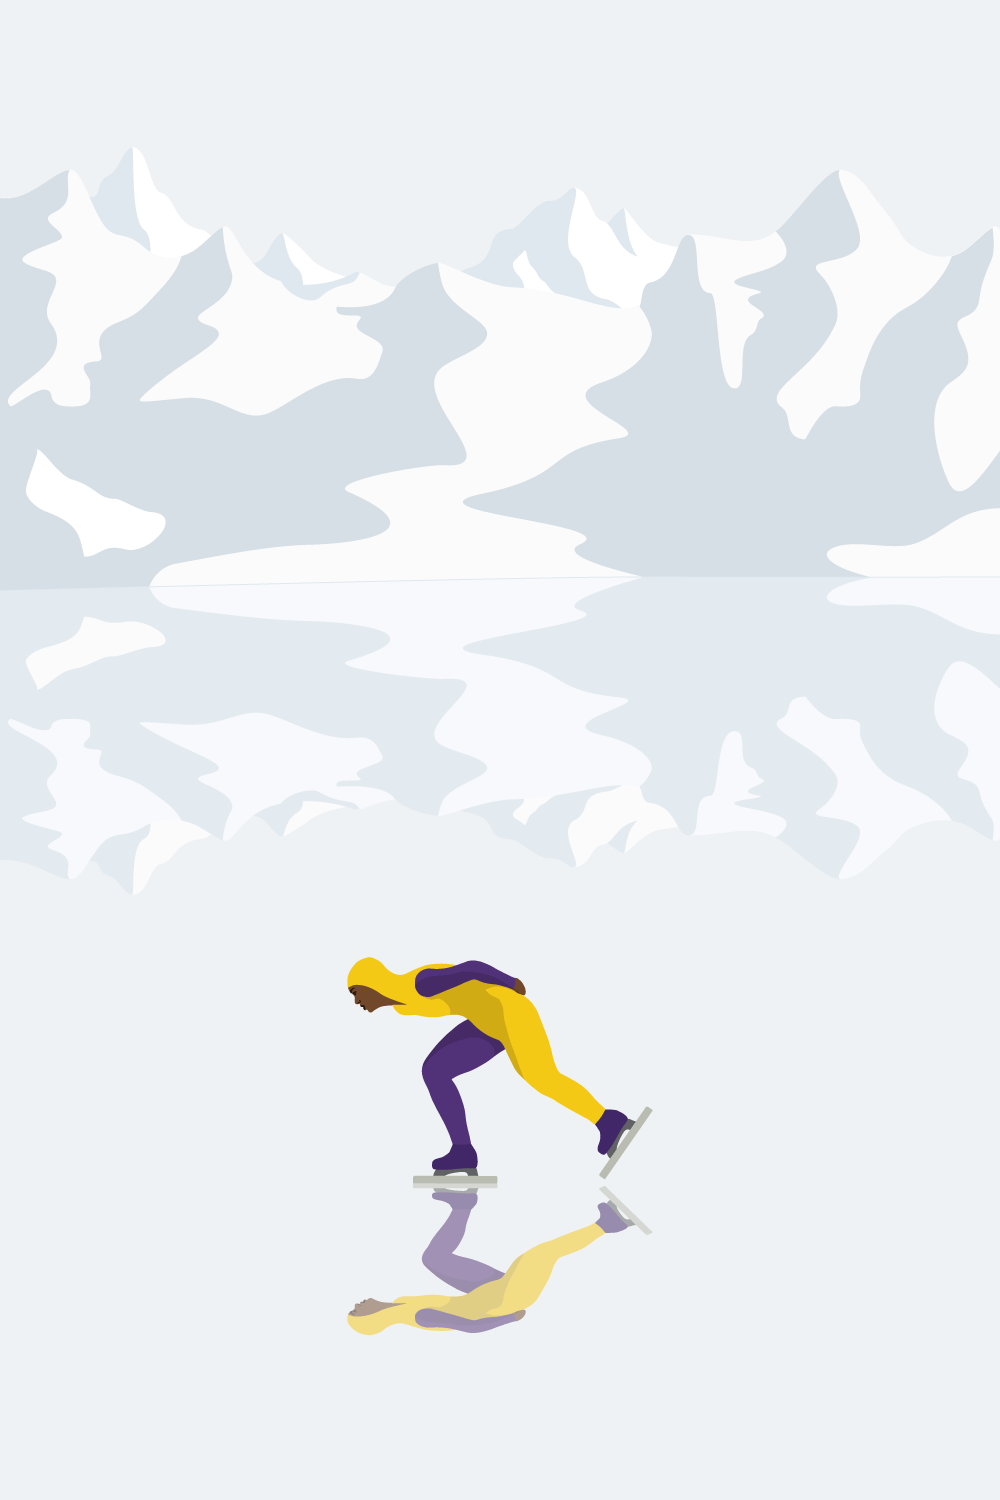 Lone Skater - illustration by Robert Fiszer